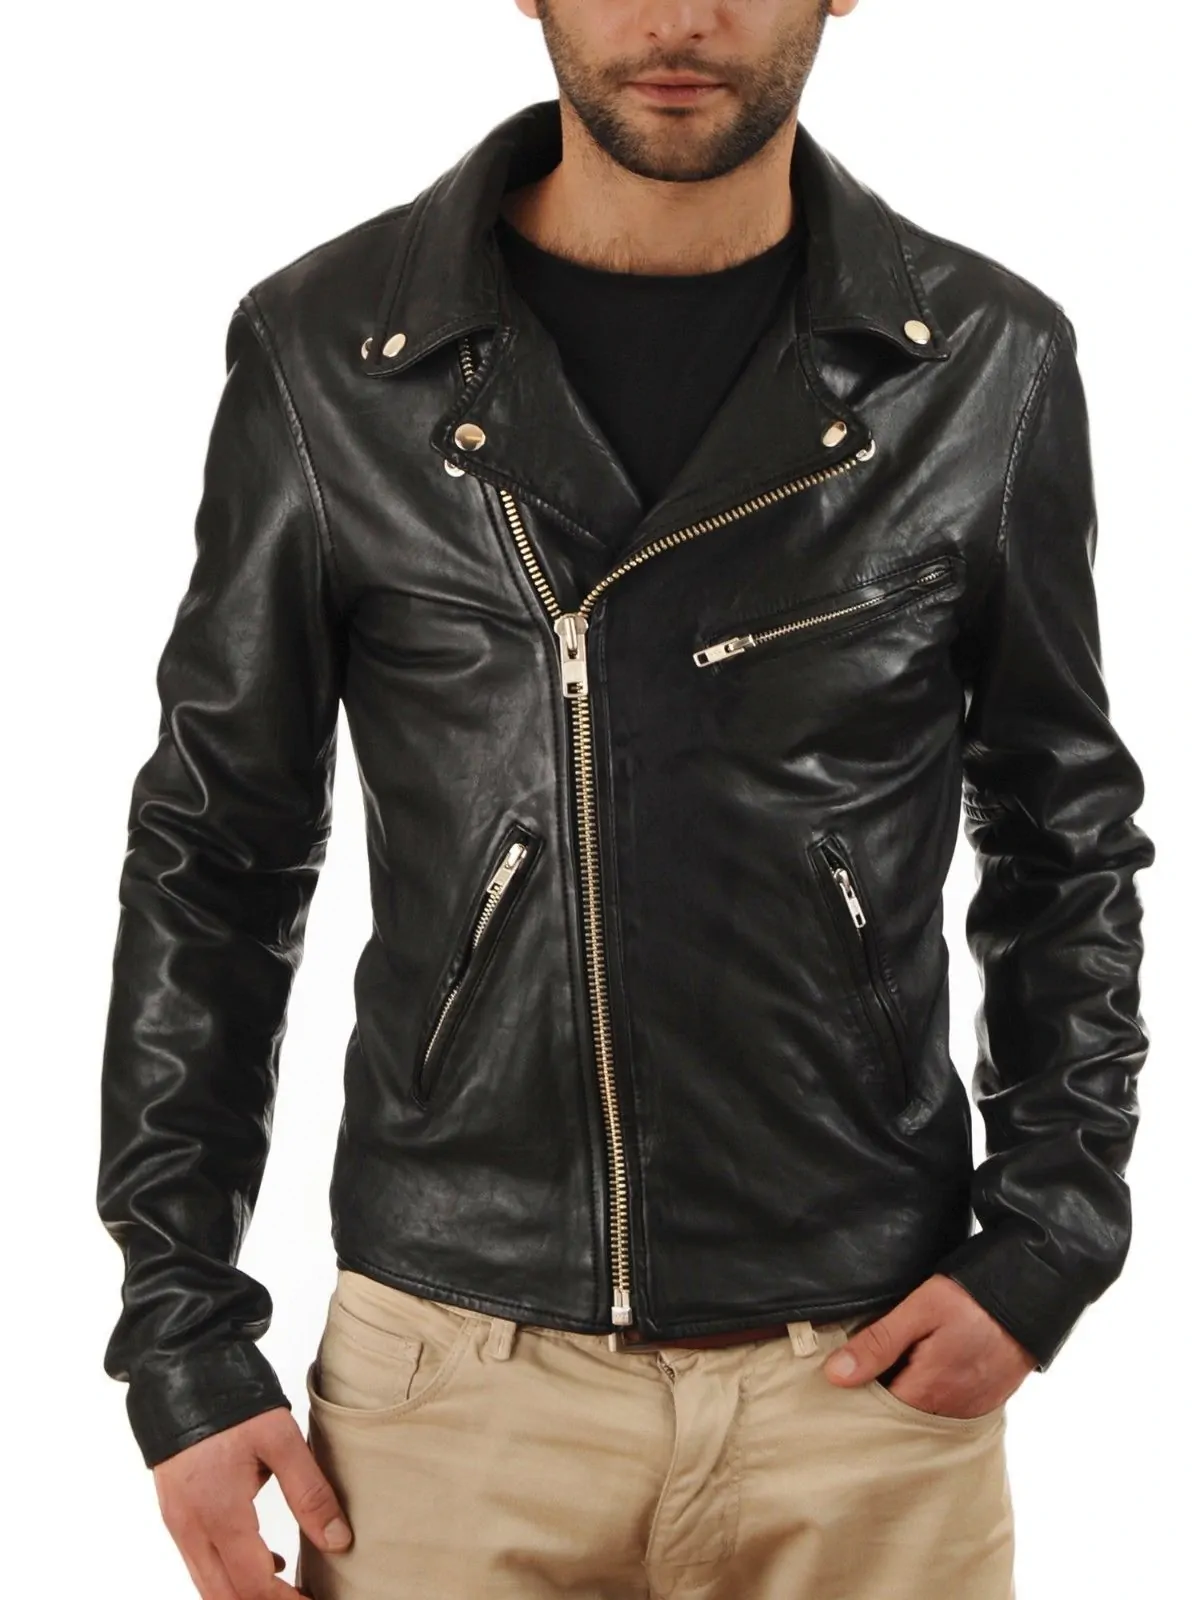 Mens Leather Jacket – LJM001